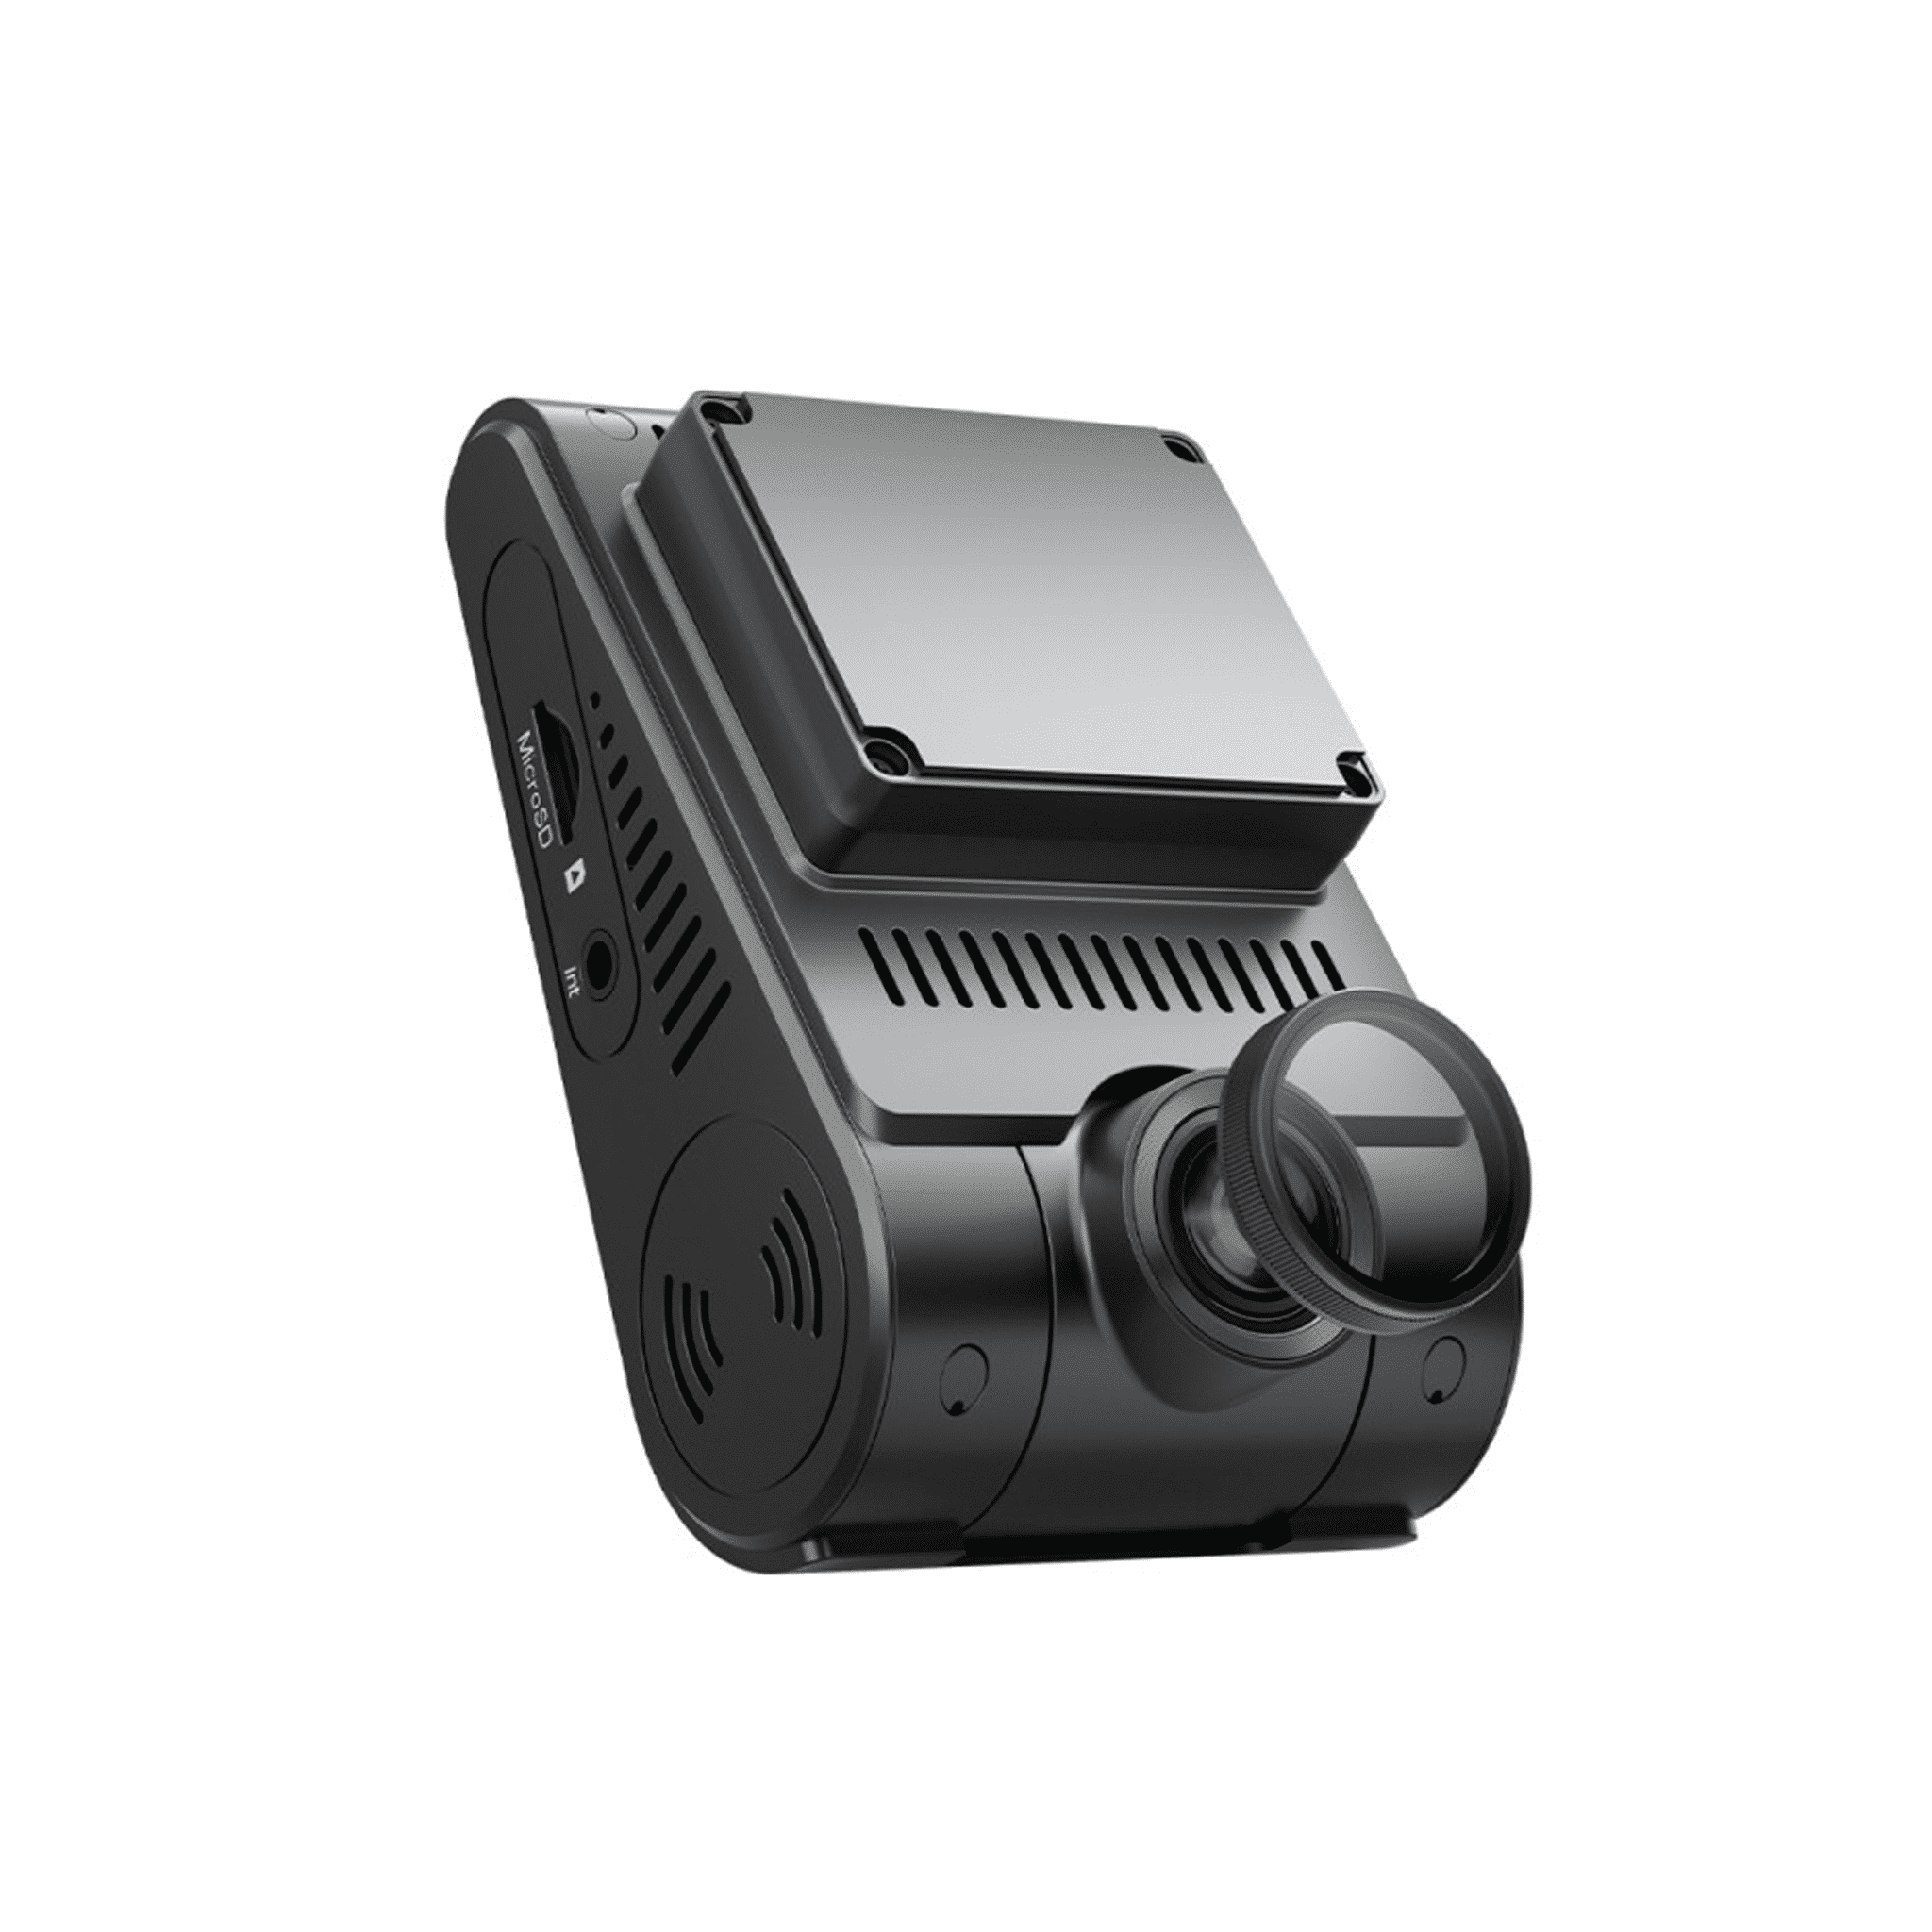 VIOFO A229 Plus 1440p Dash Cam | with accessories